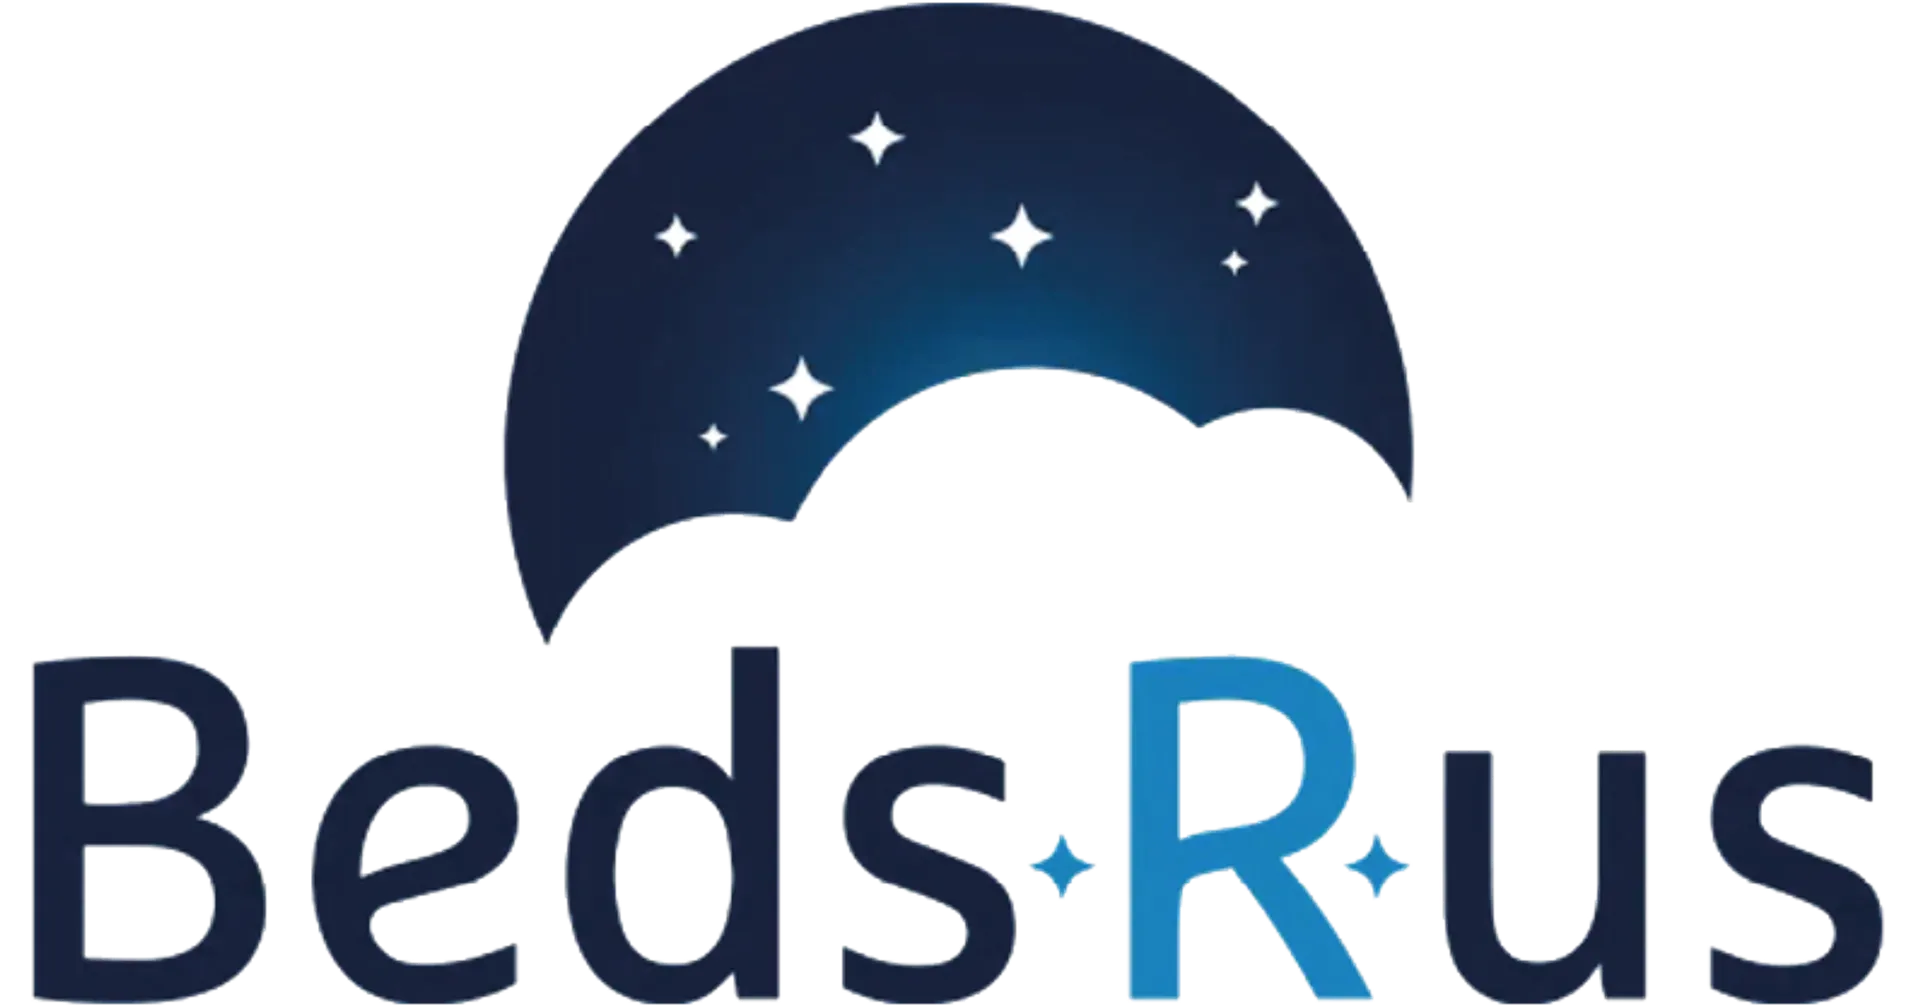 BEDS R US logo